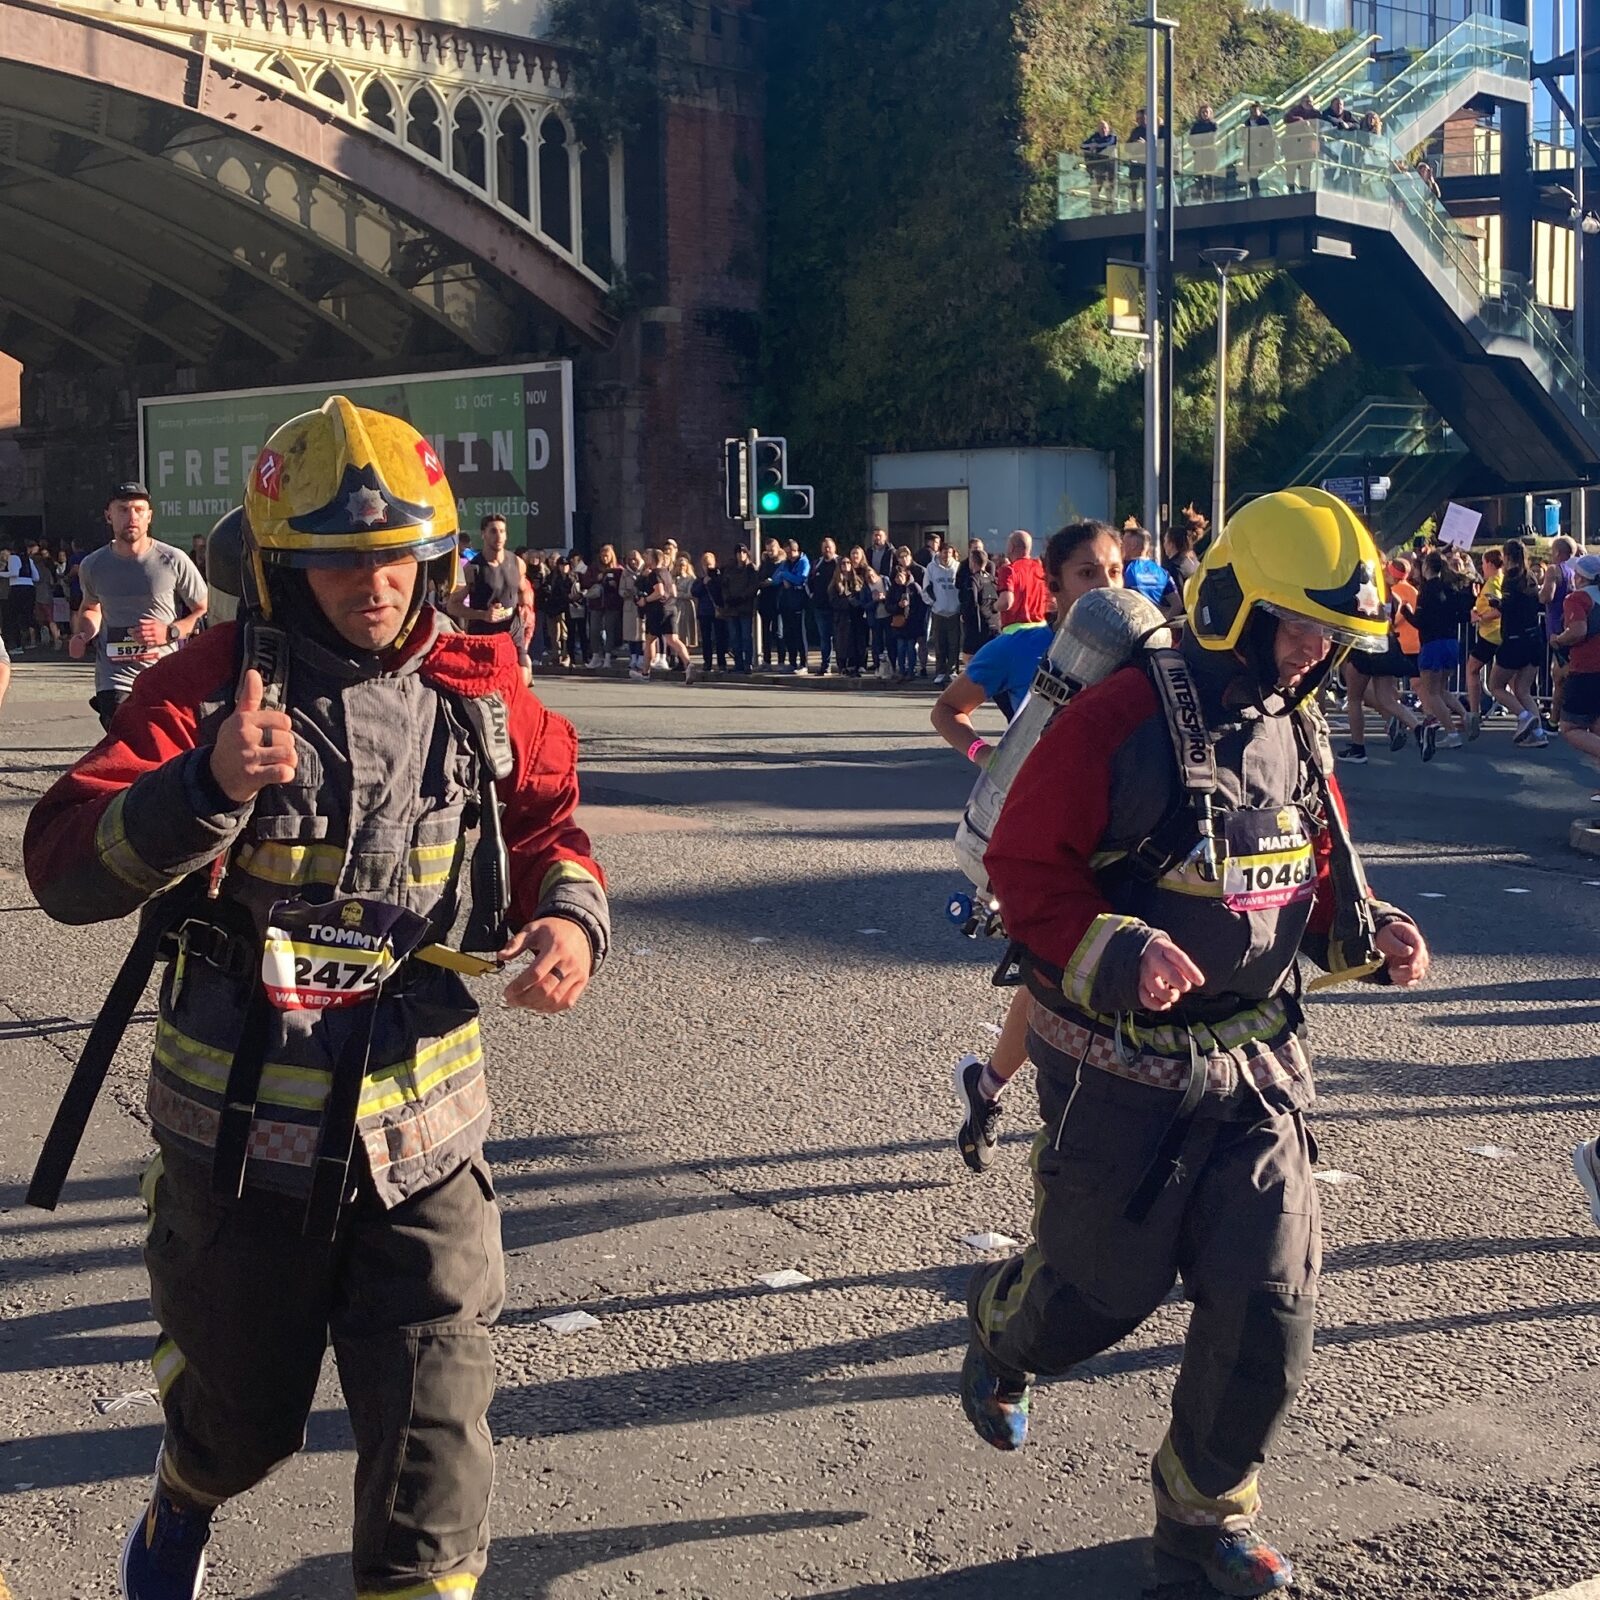 firemen run half marathon in full gear